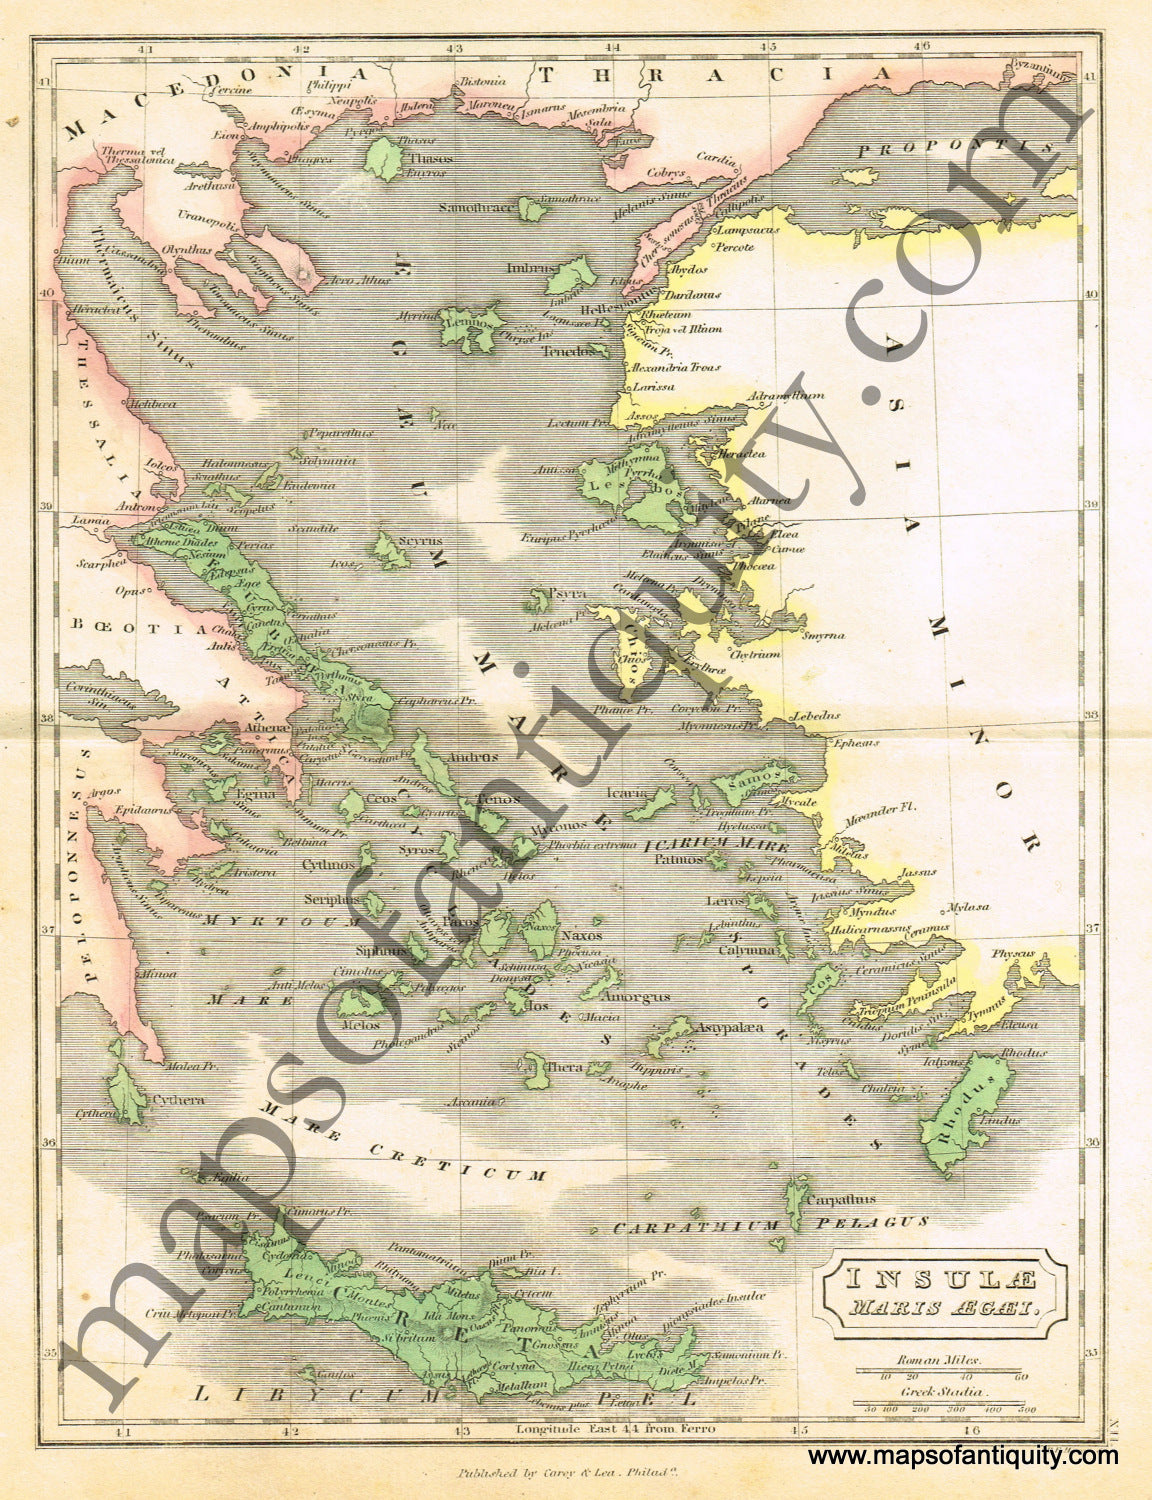 Antique-Hand-Colored-Map-Insulae-Maris-Aegaei-Europe-Ancient-World-Europe-General-Greece-&-the-Balkans-Turkey-&-the-Mediterranean-1838-Butler-Maps-Of-Antiquity